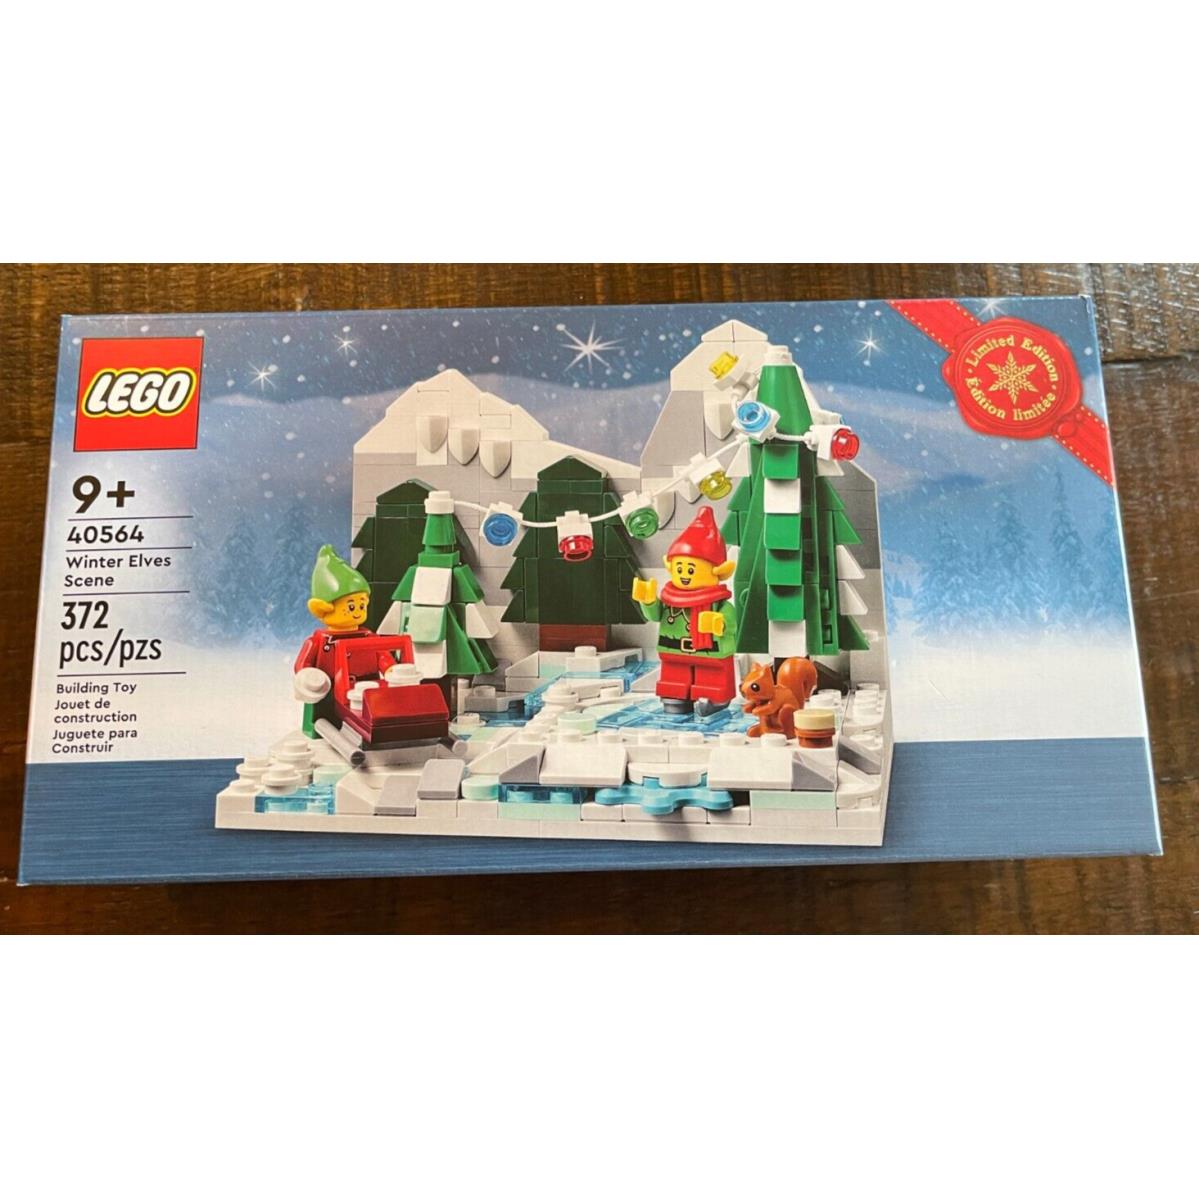 40564 Lego Winter Elves Scene Limited Edition Building Set 372 Pcs